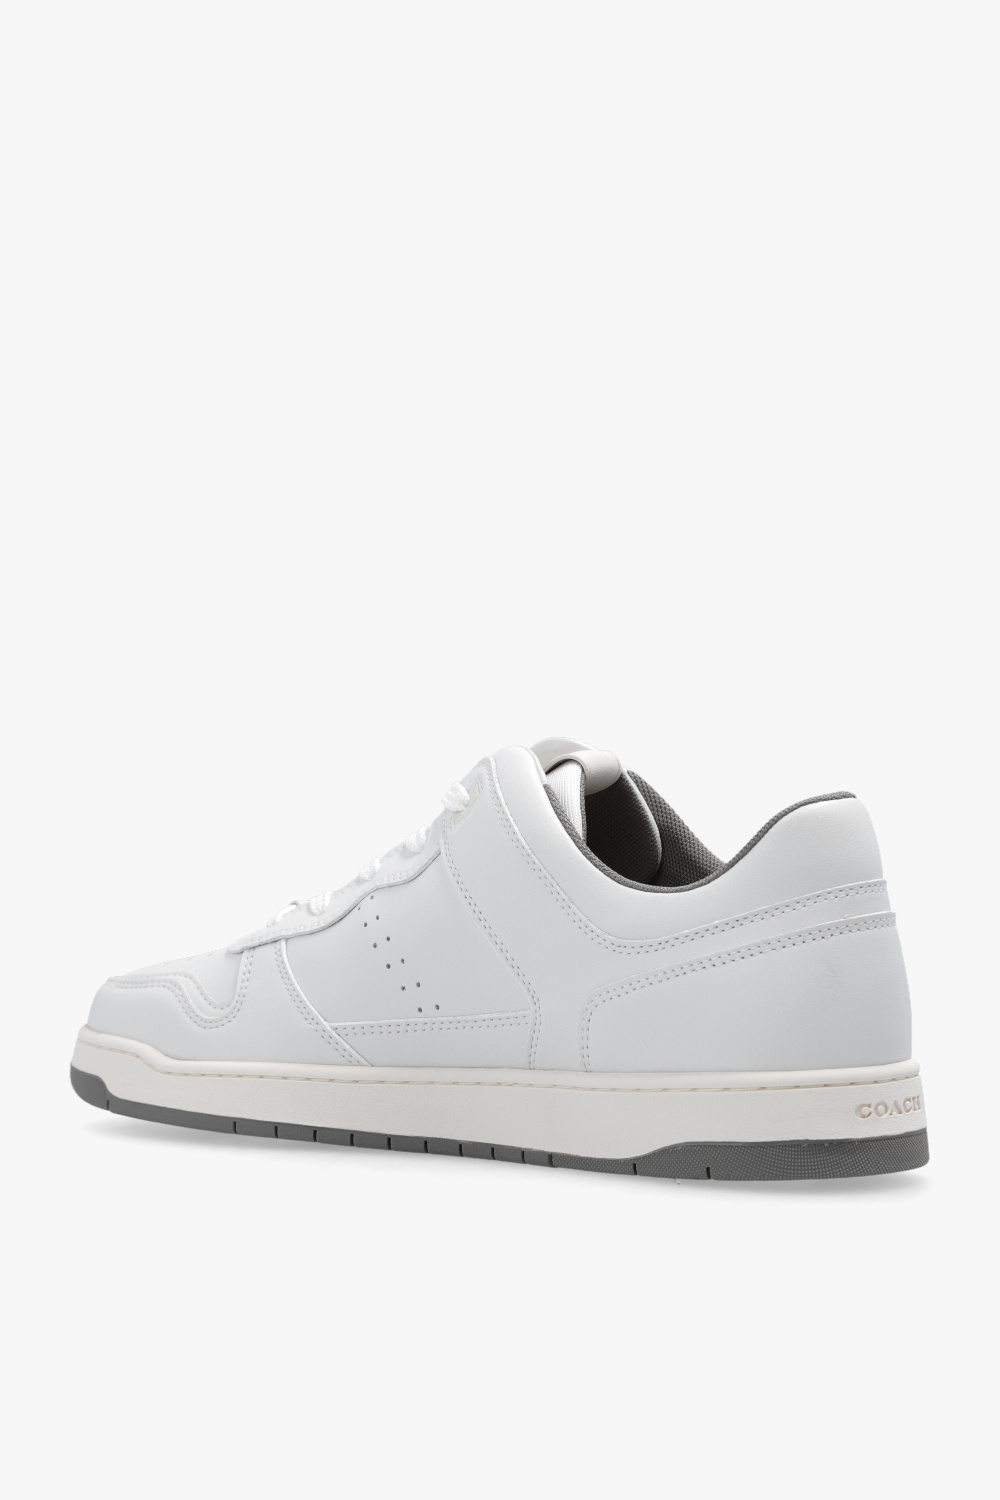 Coach ‘C201’ sneakers | Men's Shoes | Vitkac